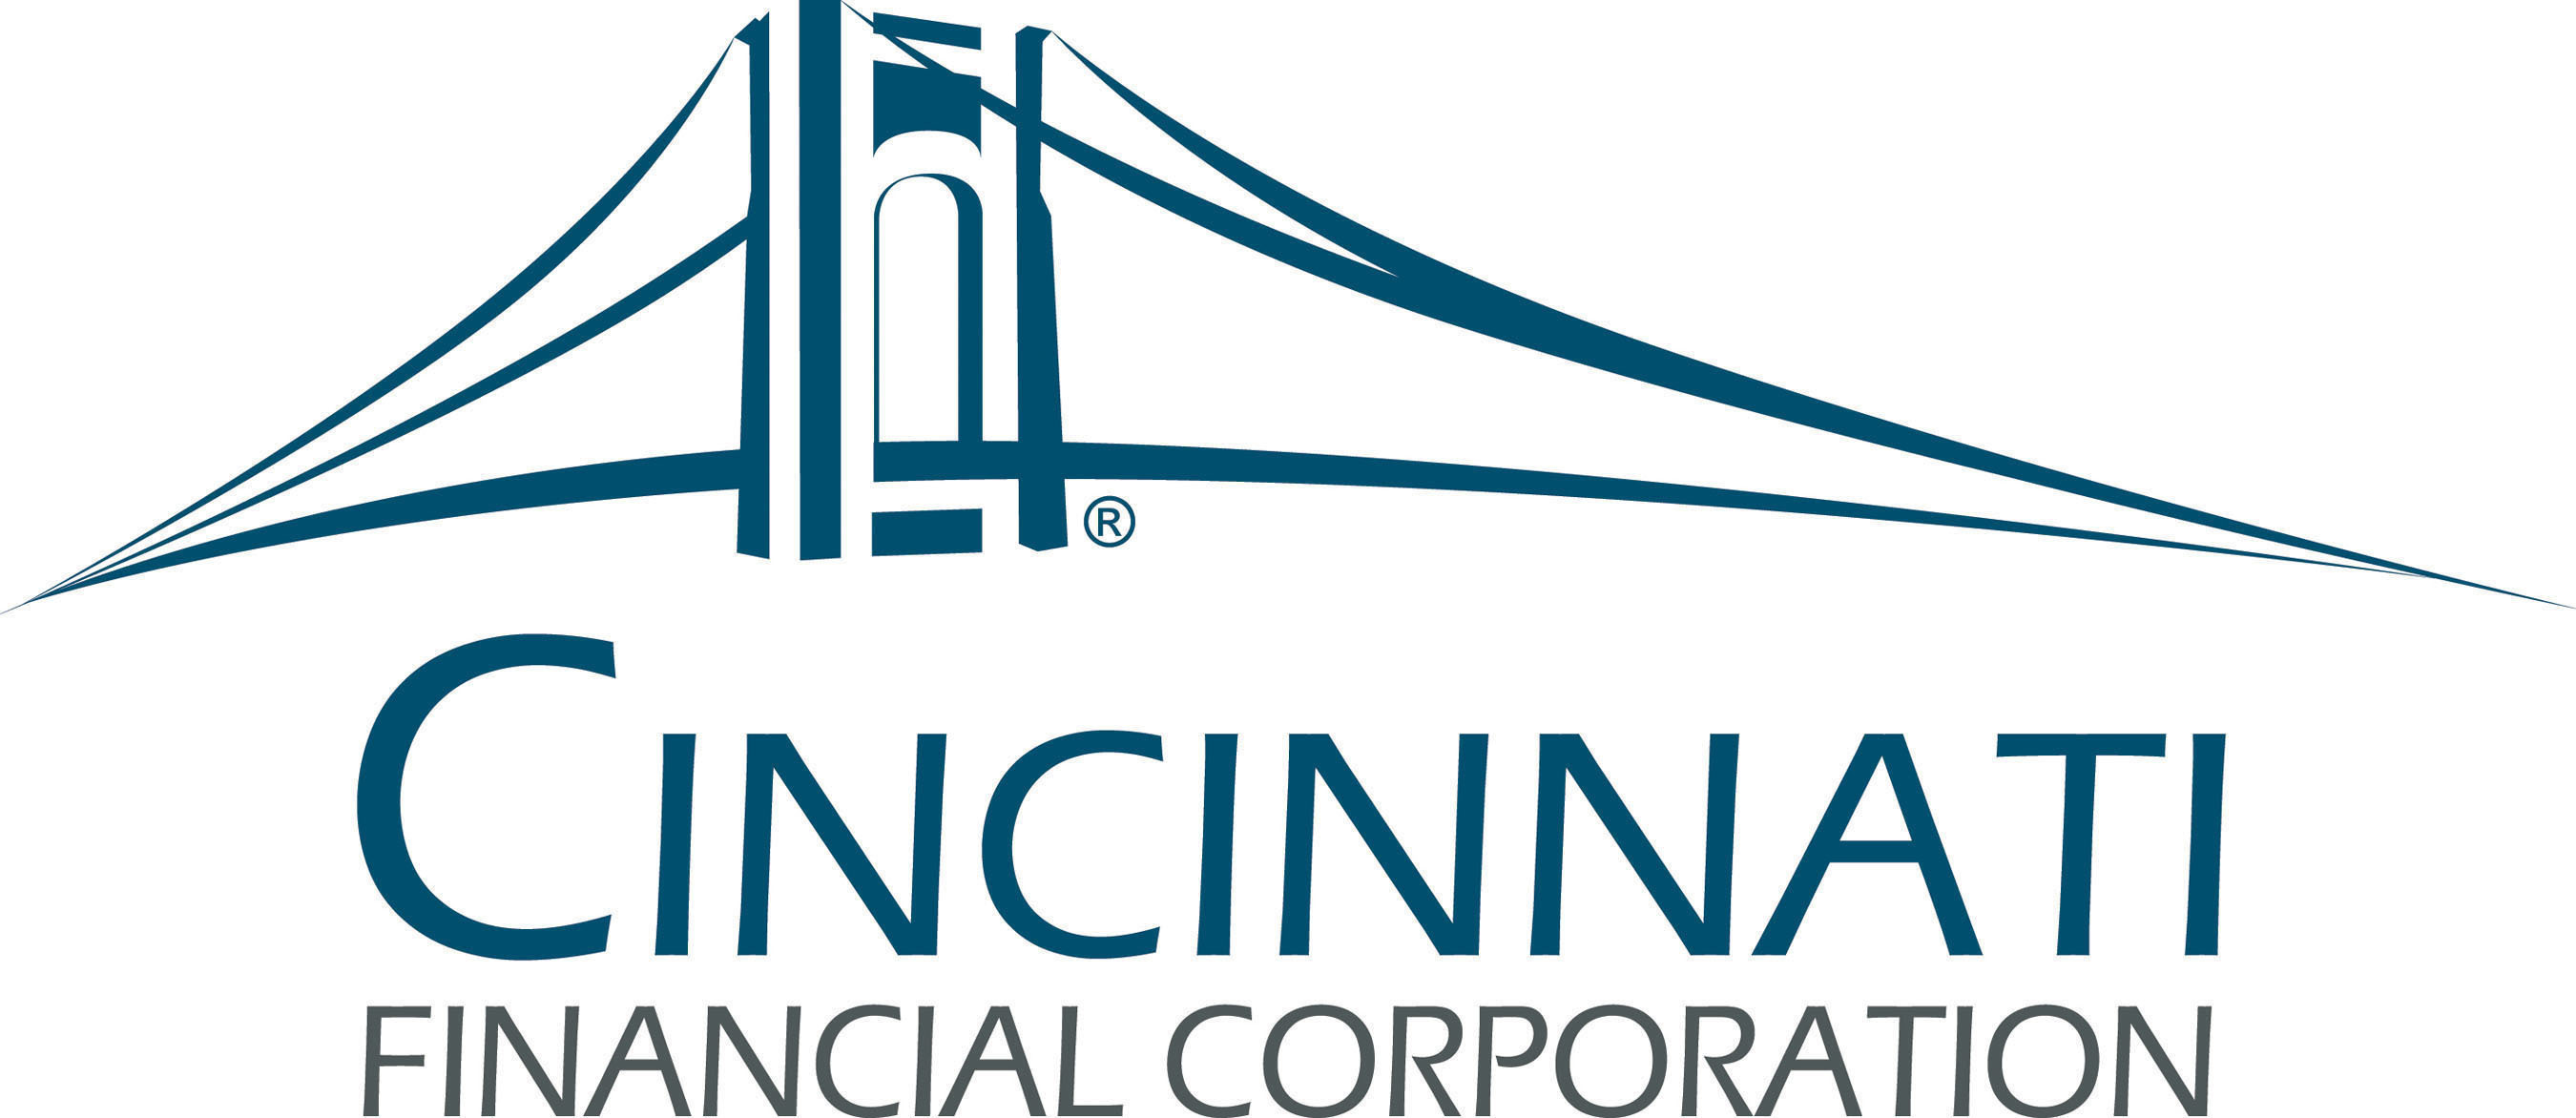 Cincinnati Financial Corporation logo. (PRNewsFoto/Cincinnati Financial Corporation) (PRNewsFoto/CINCINNATI FINANCIAL CORPORATION) (PRNewsFoto/CINCINNATI FINANCIAL CORPORATION)